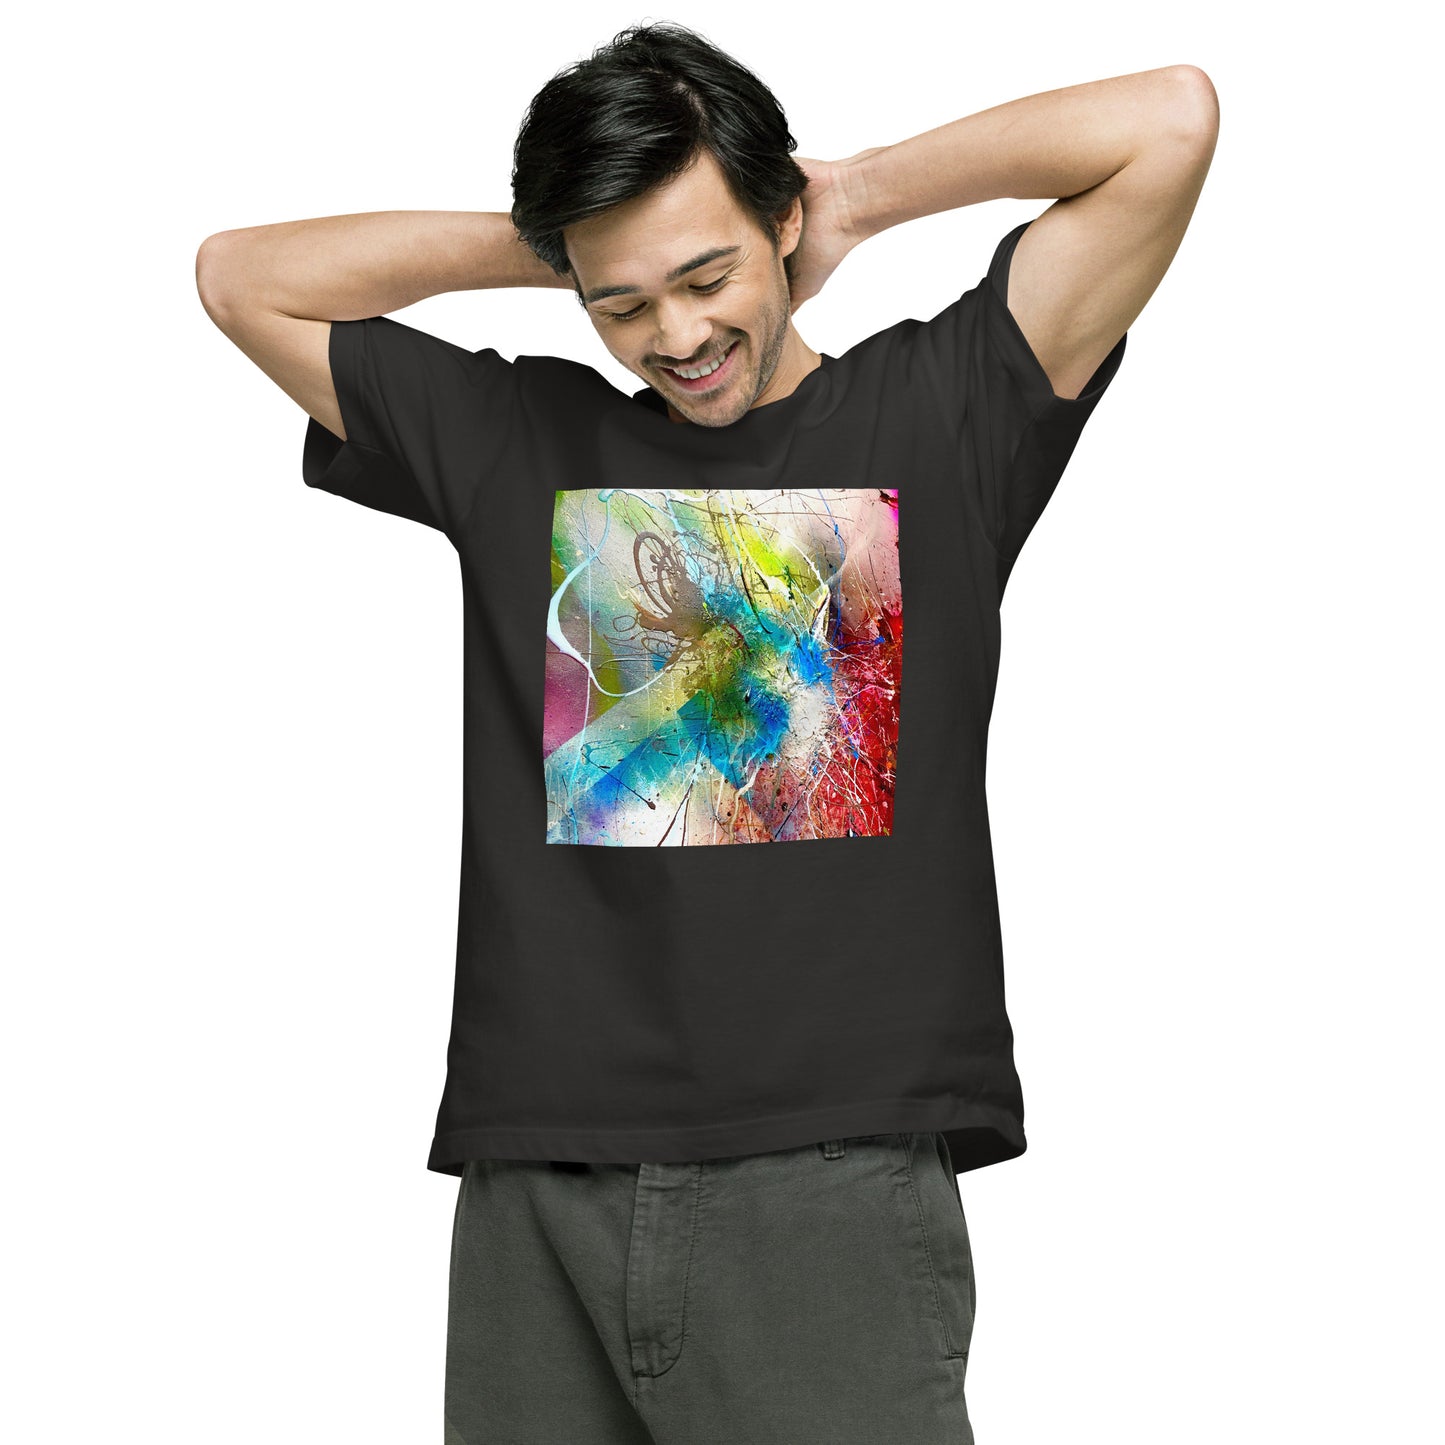 042-Art-Cise-2-前面プリントTシャツ-アートをデザイン